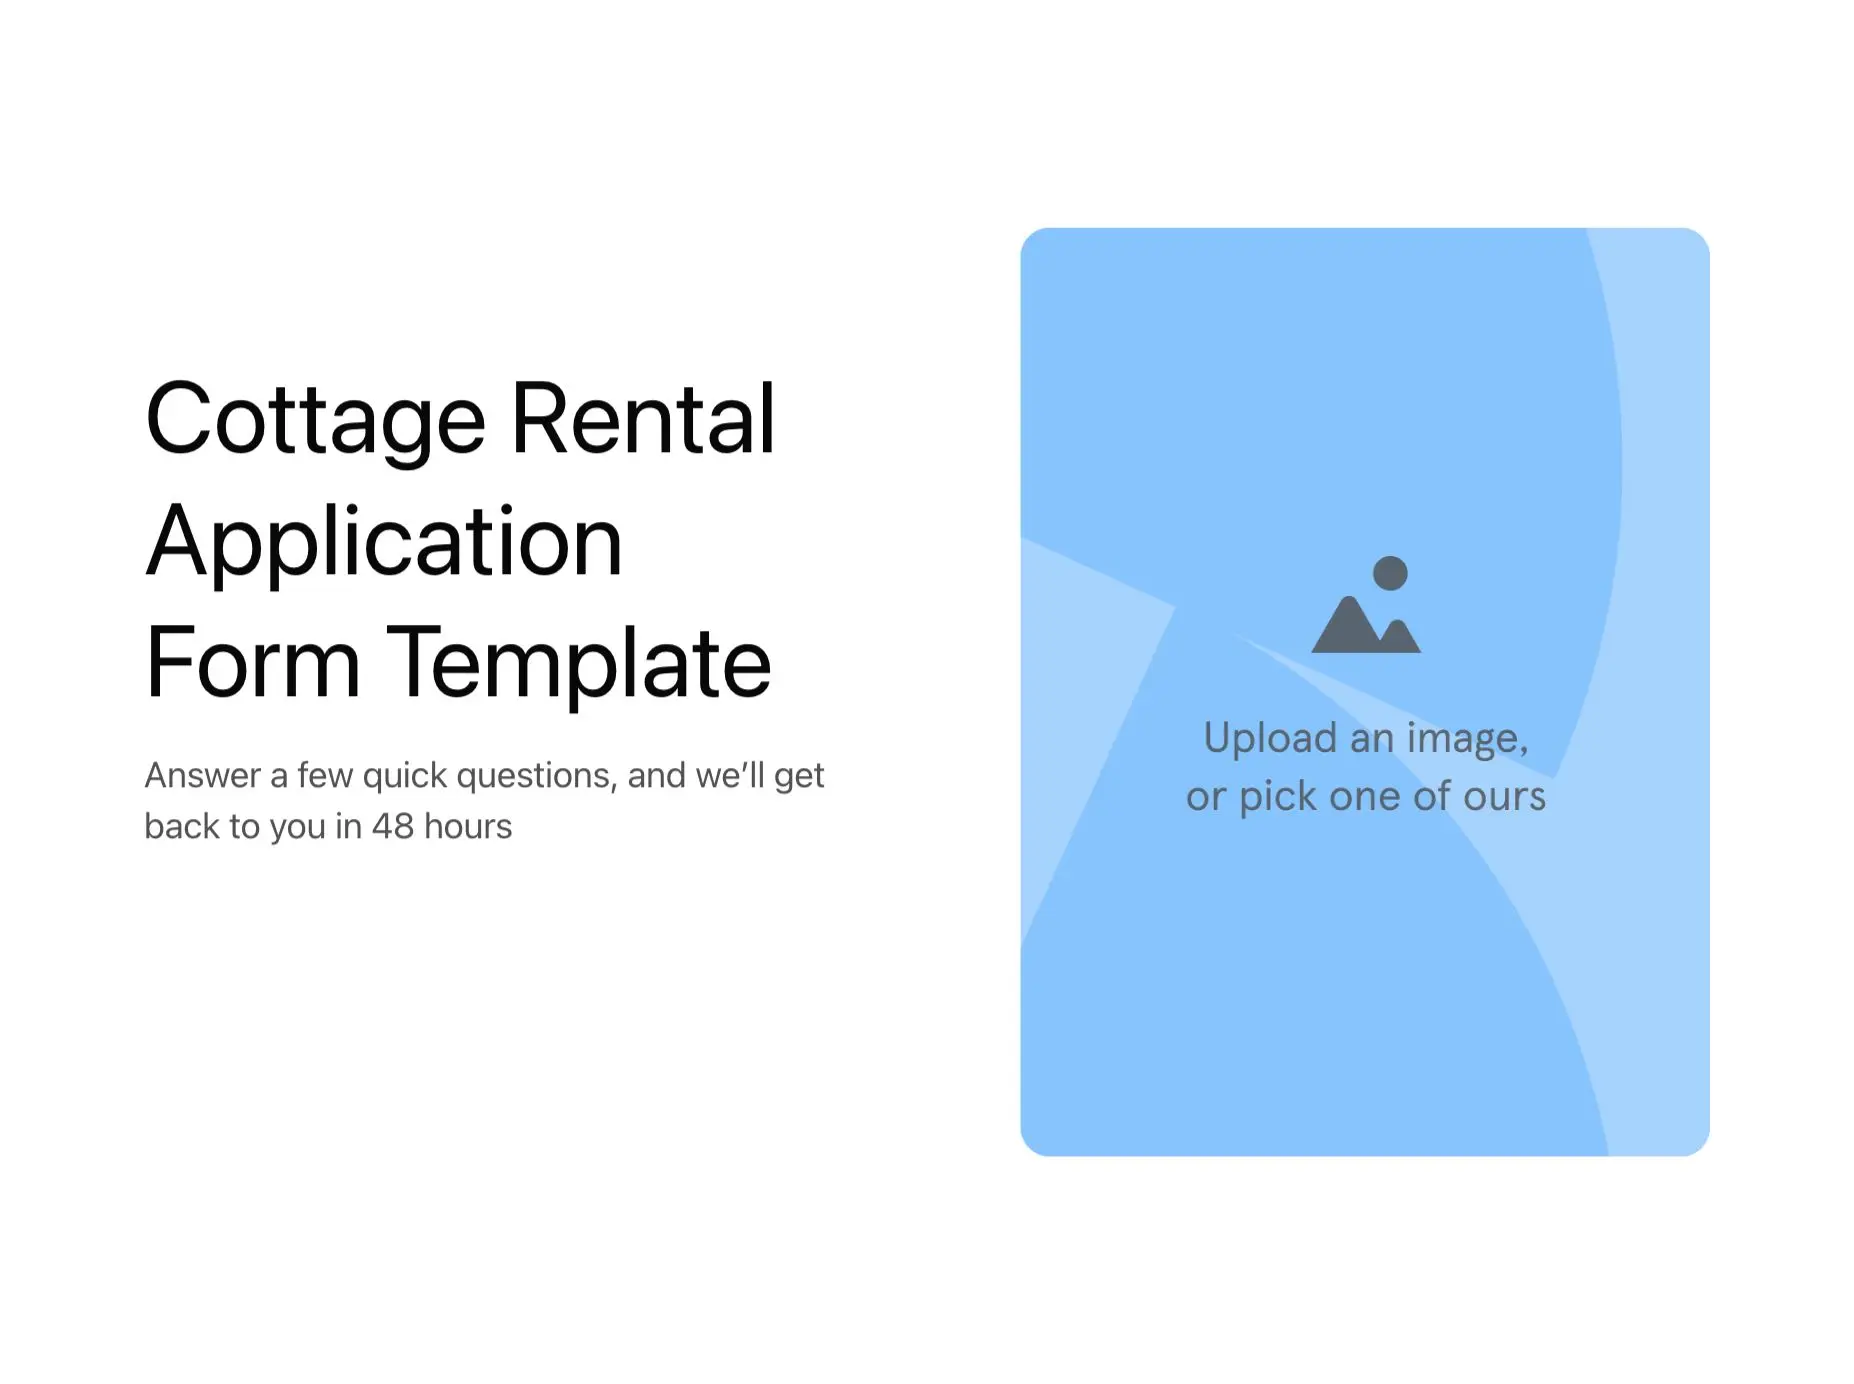 Cottage Rental Application Form Template Hero